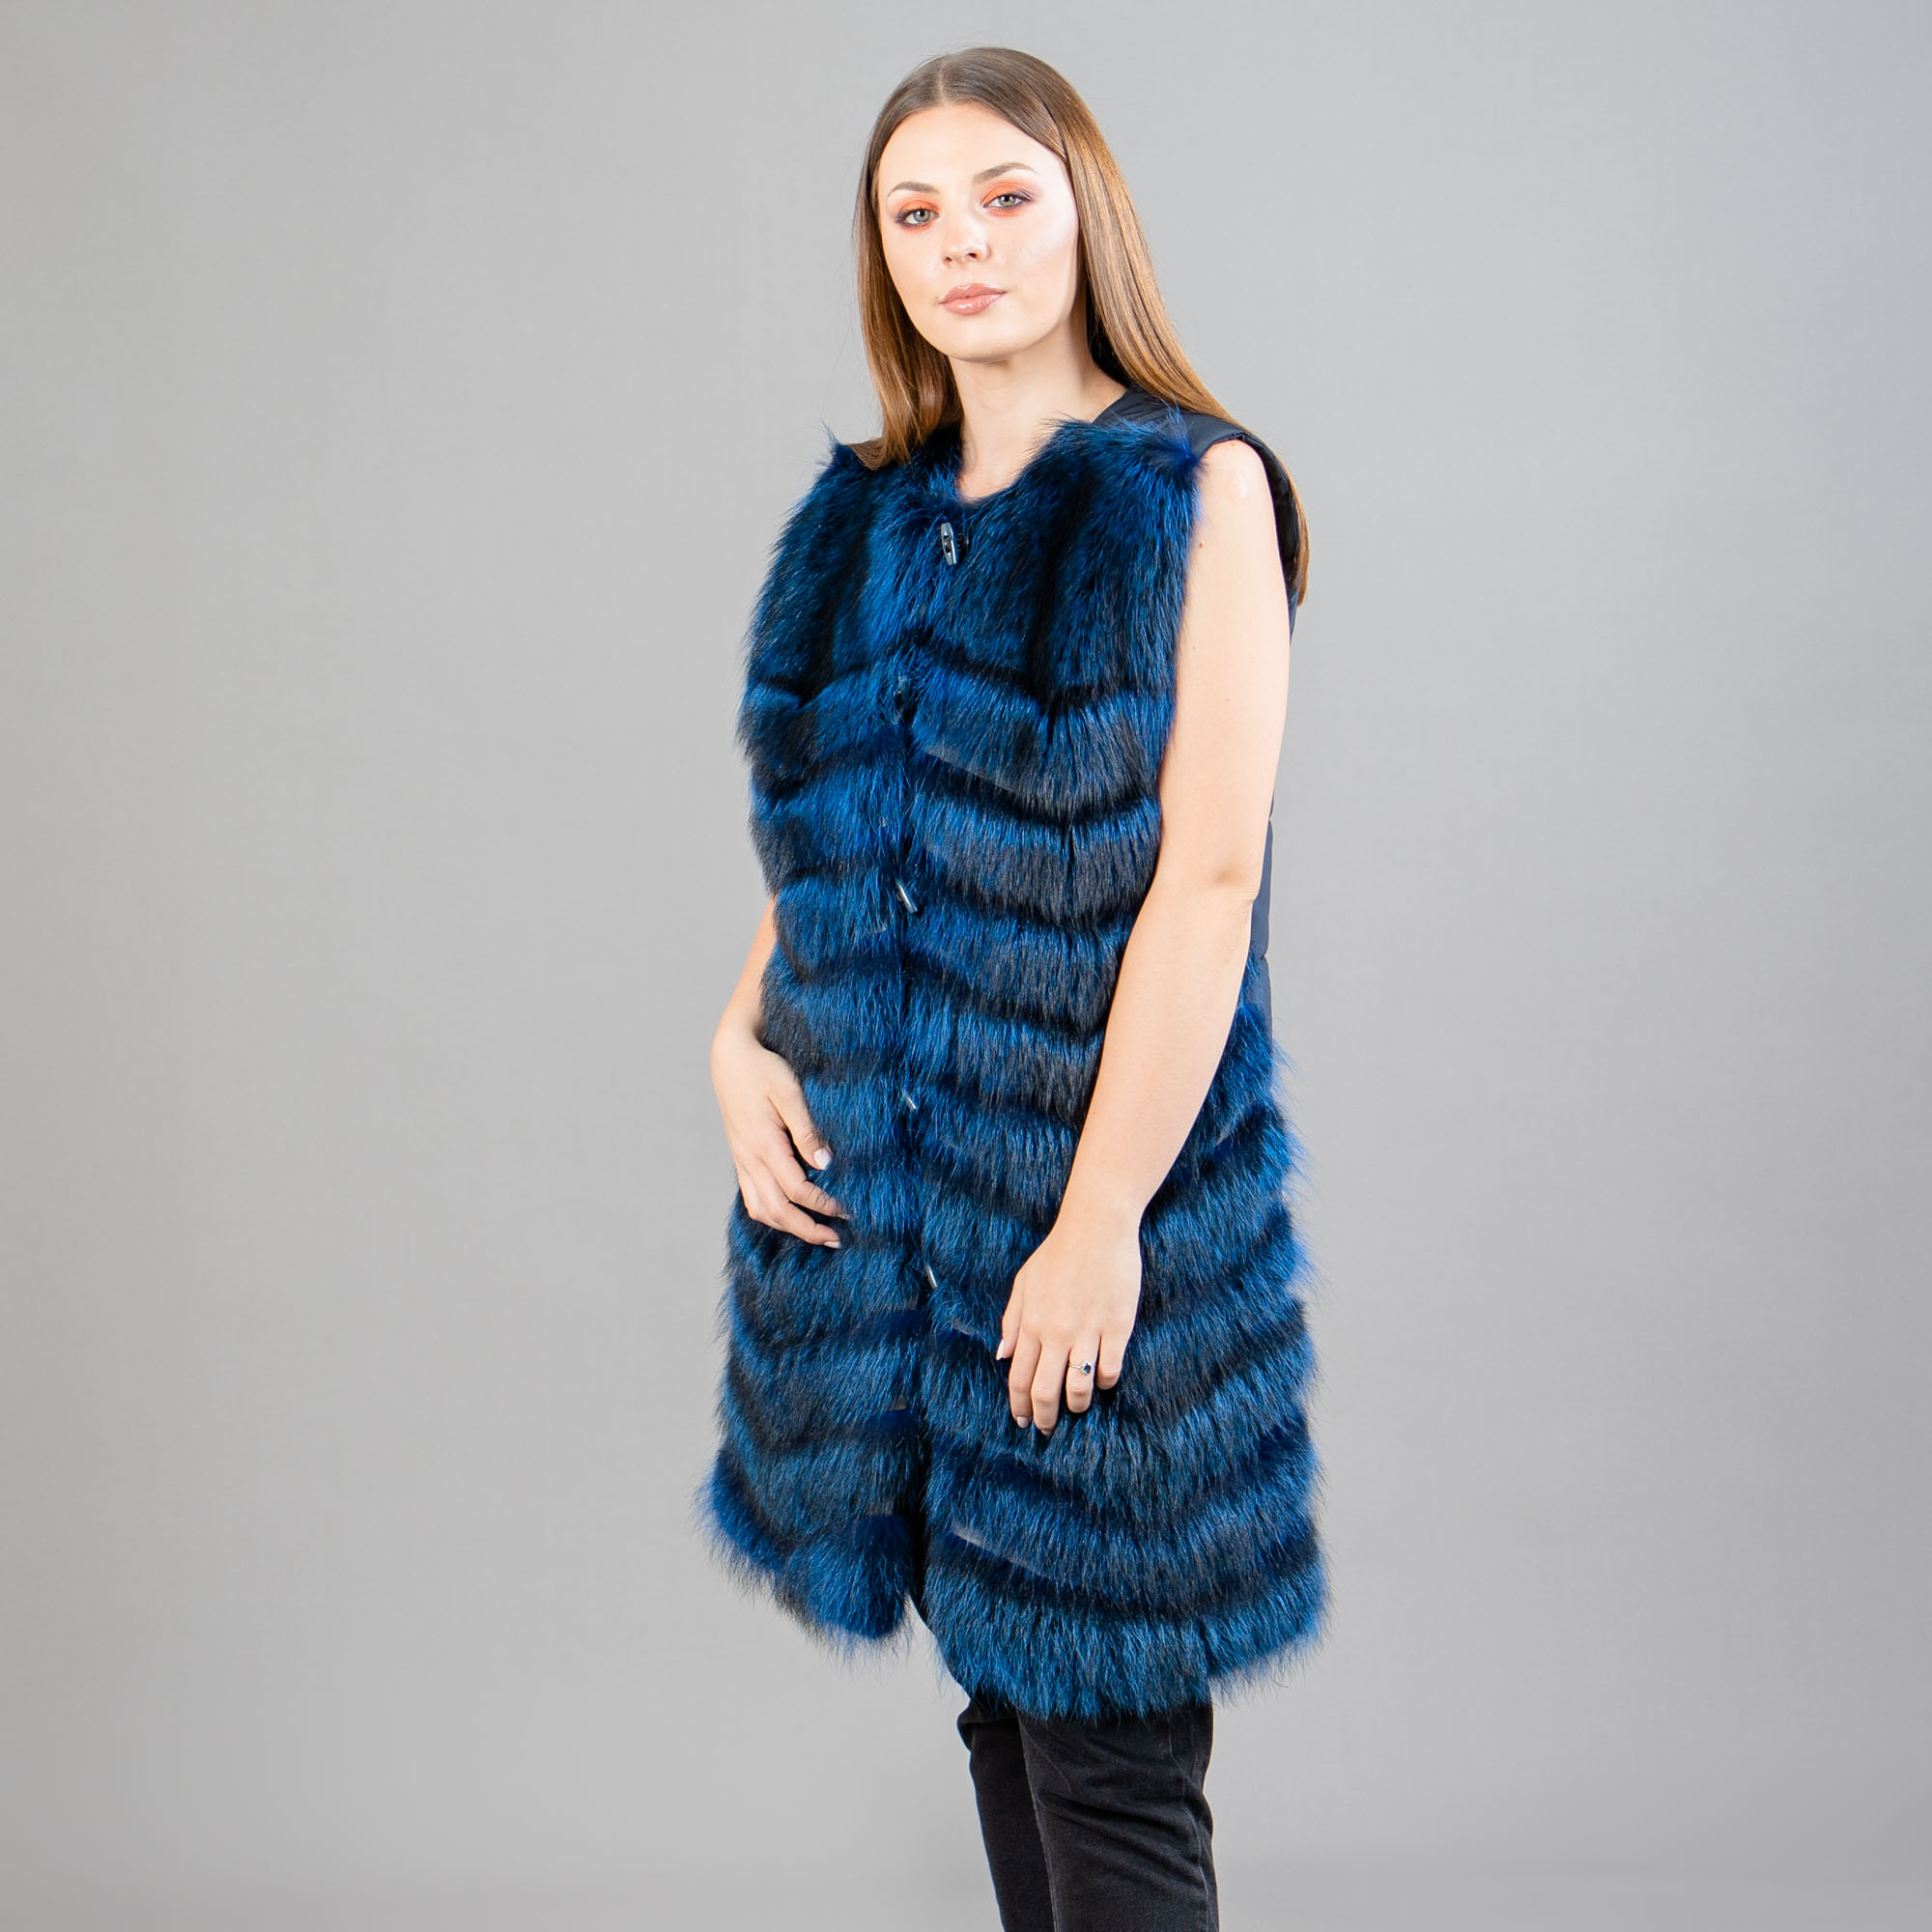 Raccoon fur vest in blue color